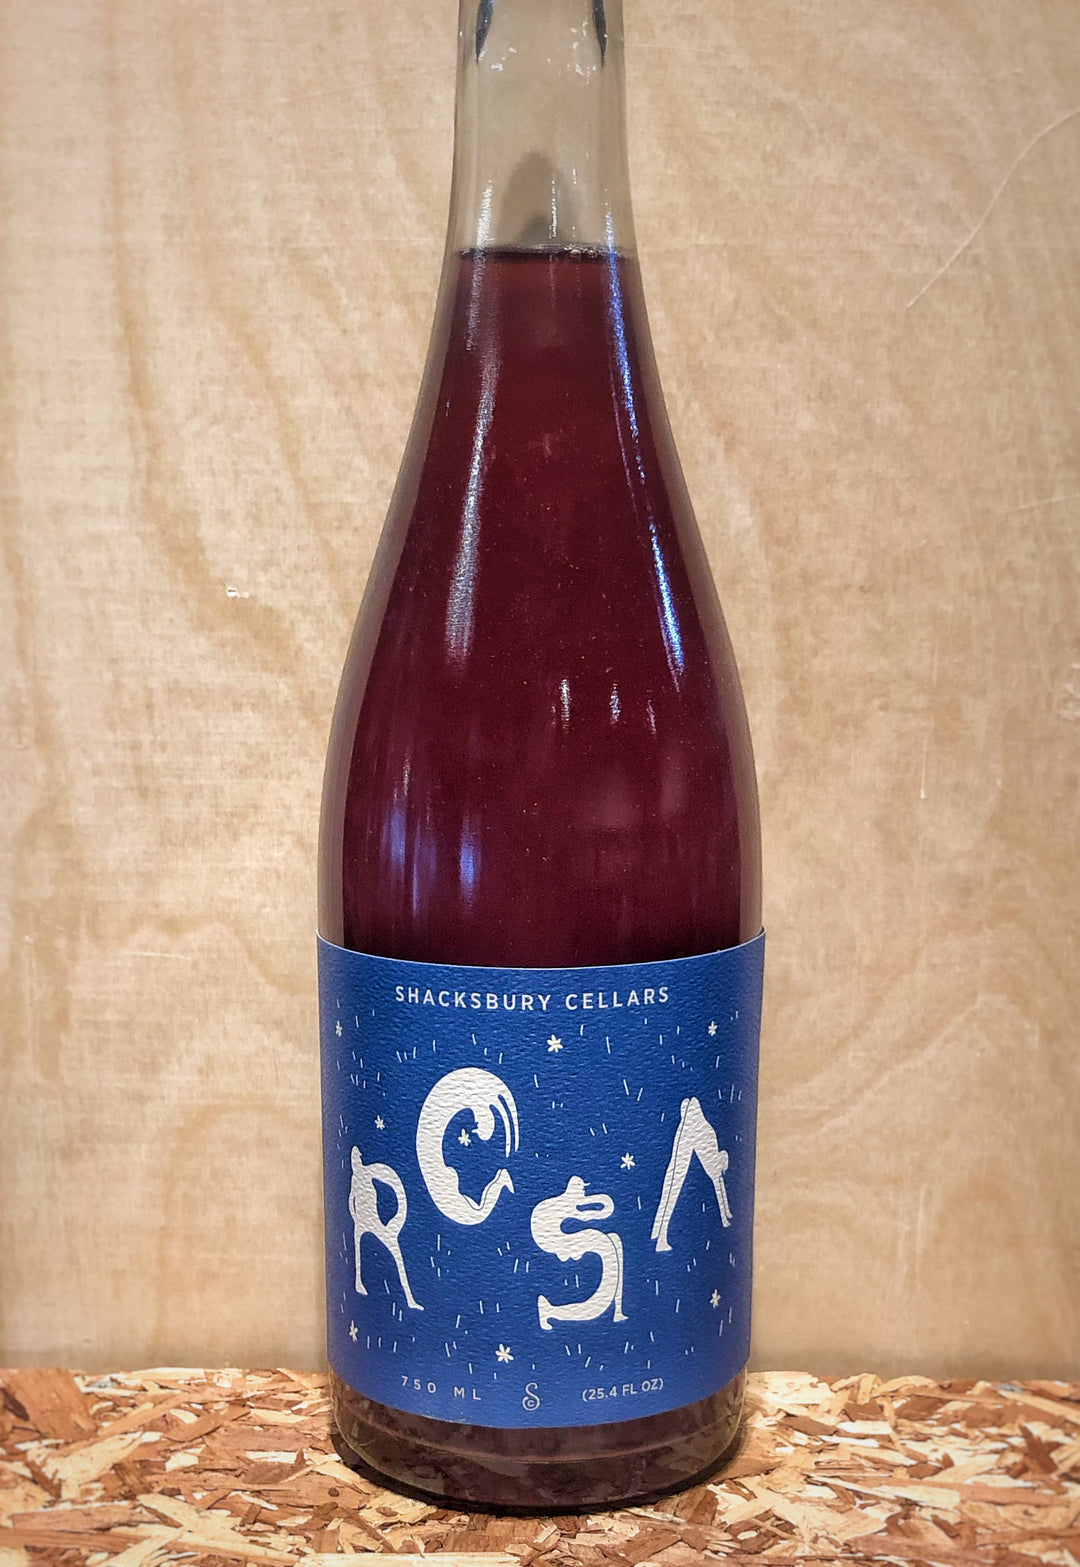 Shacksbury Cellars x Martha Stoumen 'Rosa' Sparkling Hard Cider aged on Red Wine Grape Skins (Vergennes, VT)